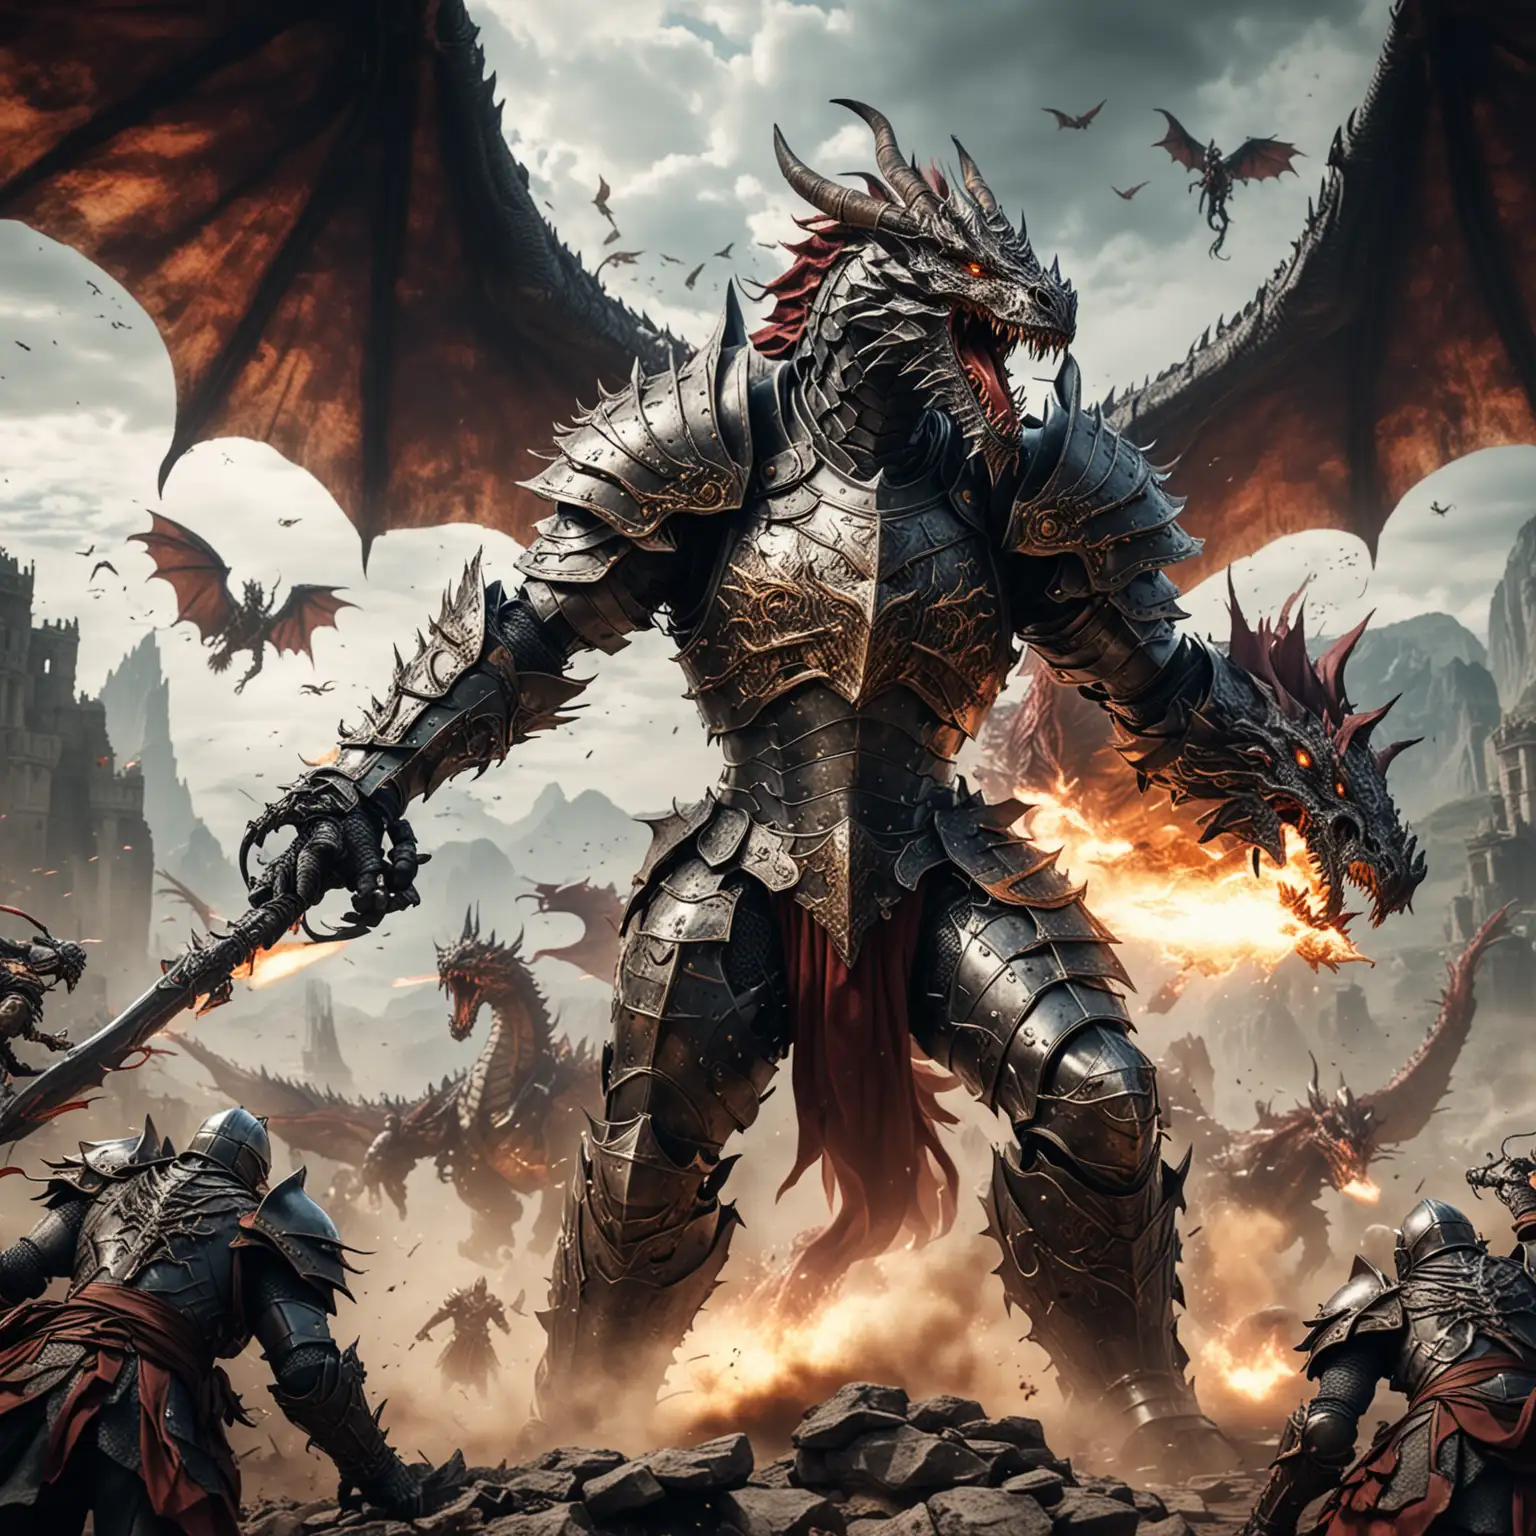 Iron armor knight fighting with flying gigantic dragon battle scene